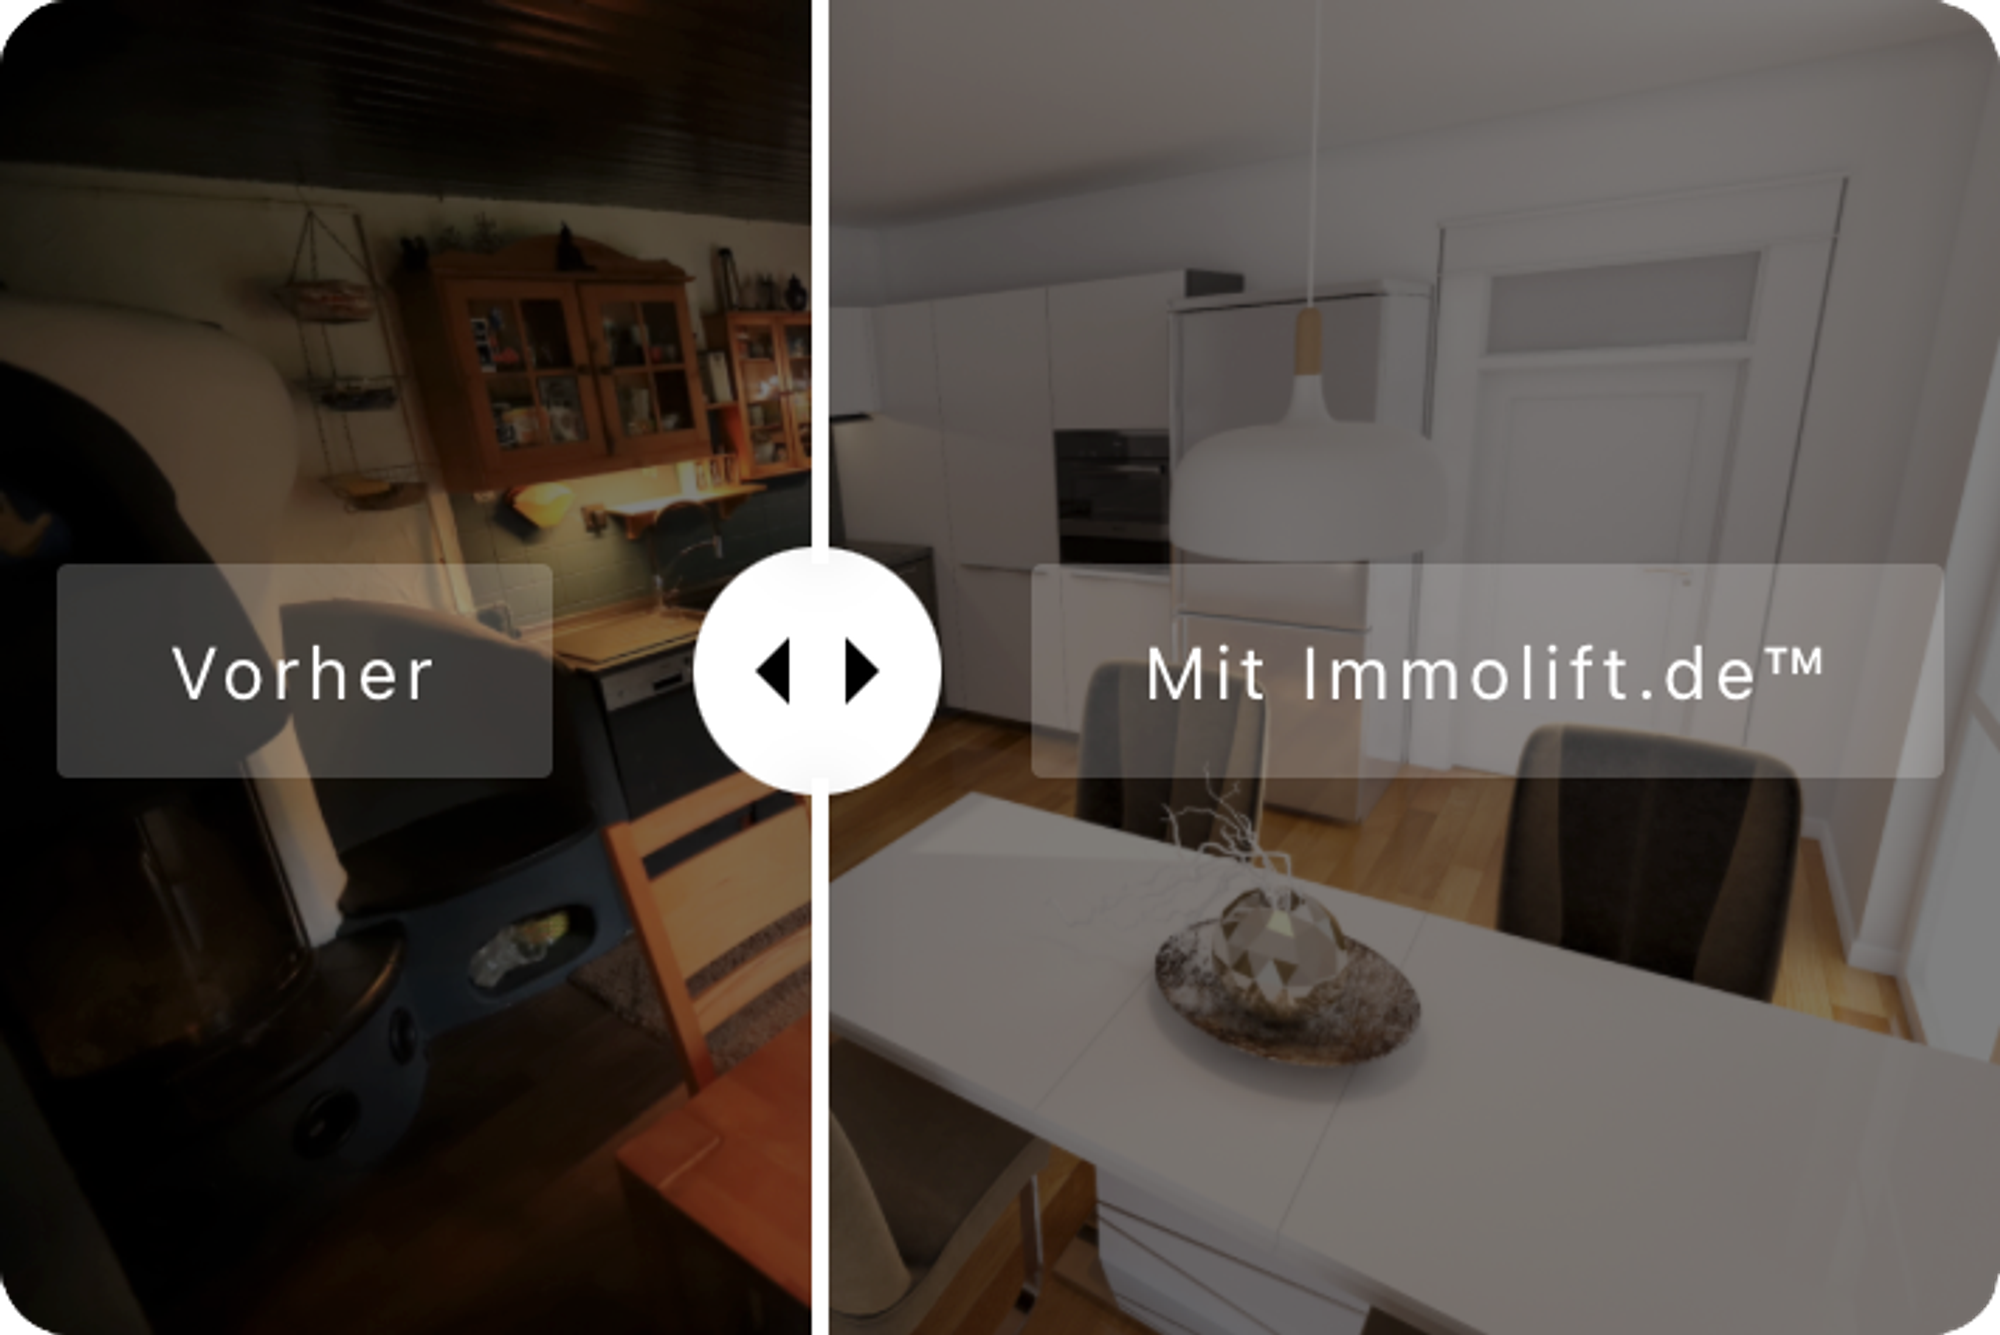 Immolift.de - Virtuelles Homestaging